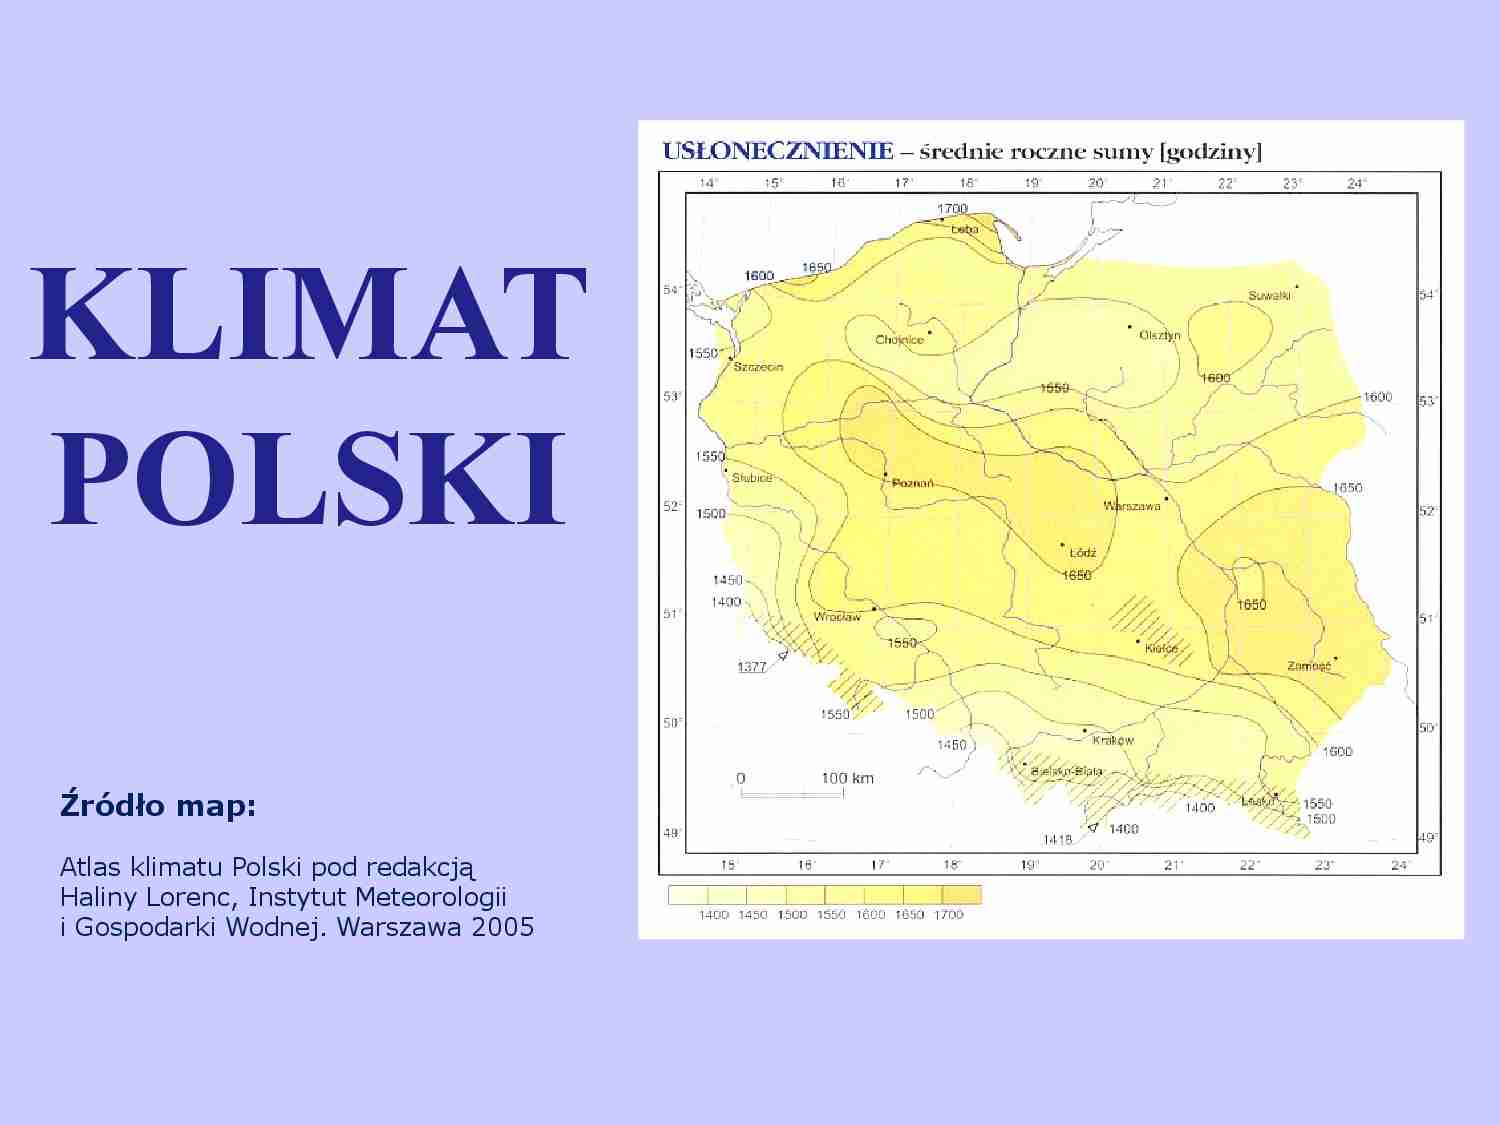 Klimat polski - charakterystyka  - strona 1